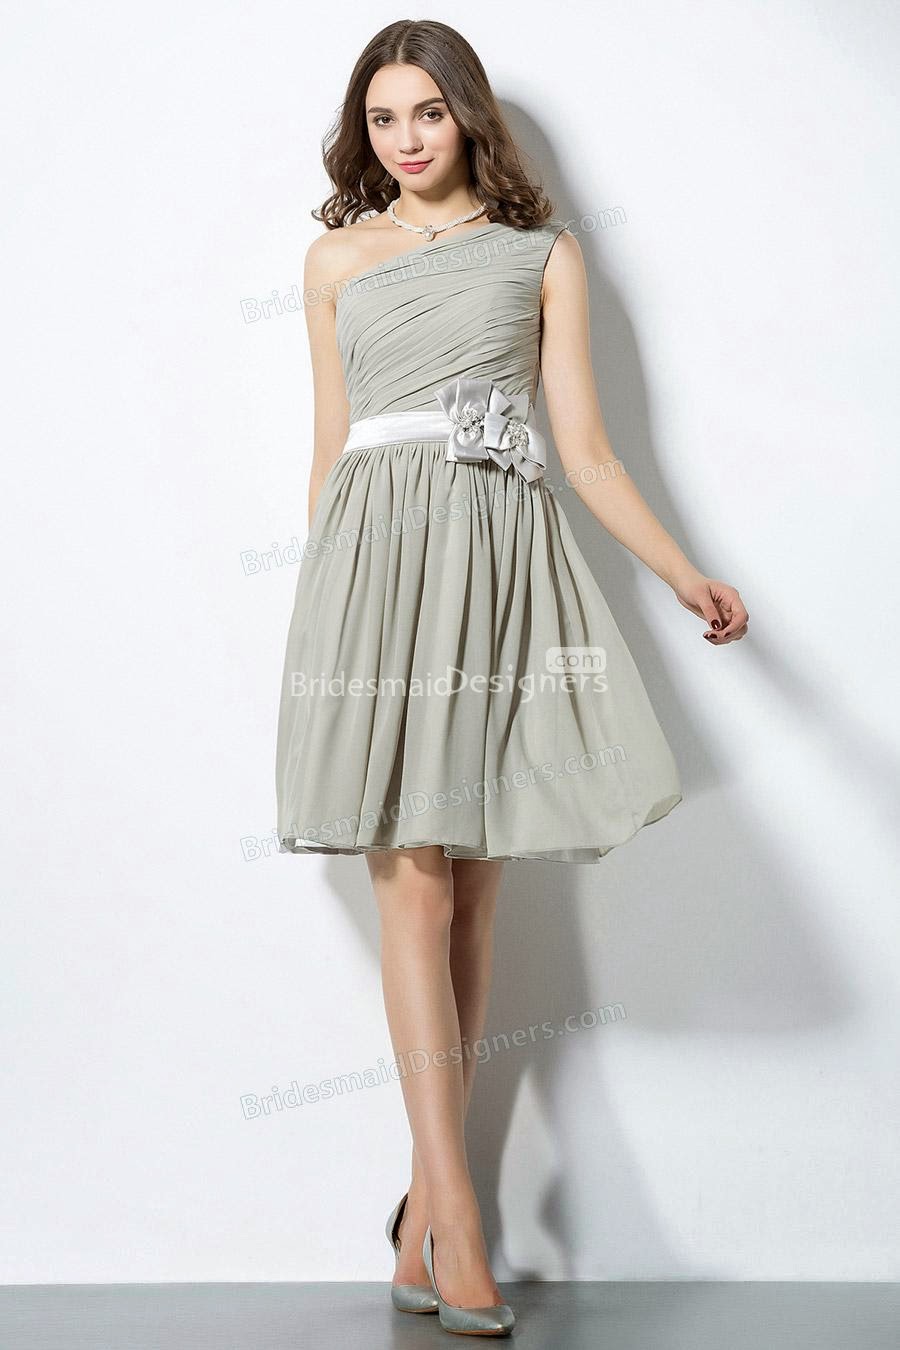 http://www.bridesmaiddesigners.com/pleated-single-shoulder-a-line-knee-length-grey-chiffon-bridesmaid-dress-with-flower-band-1100.html